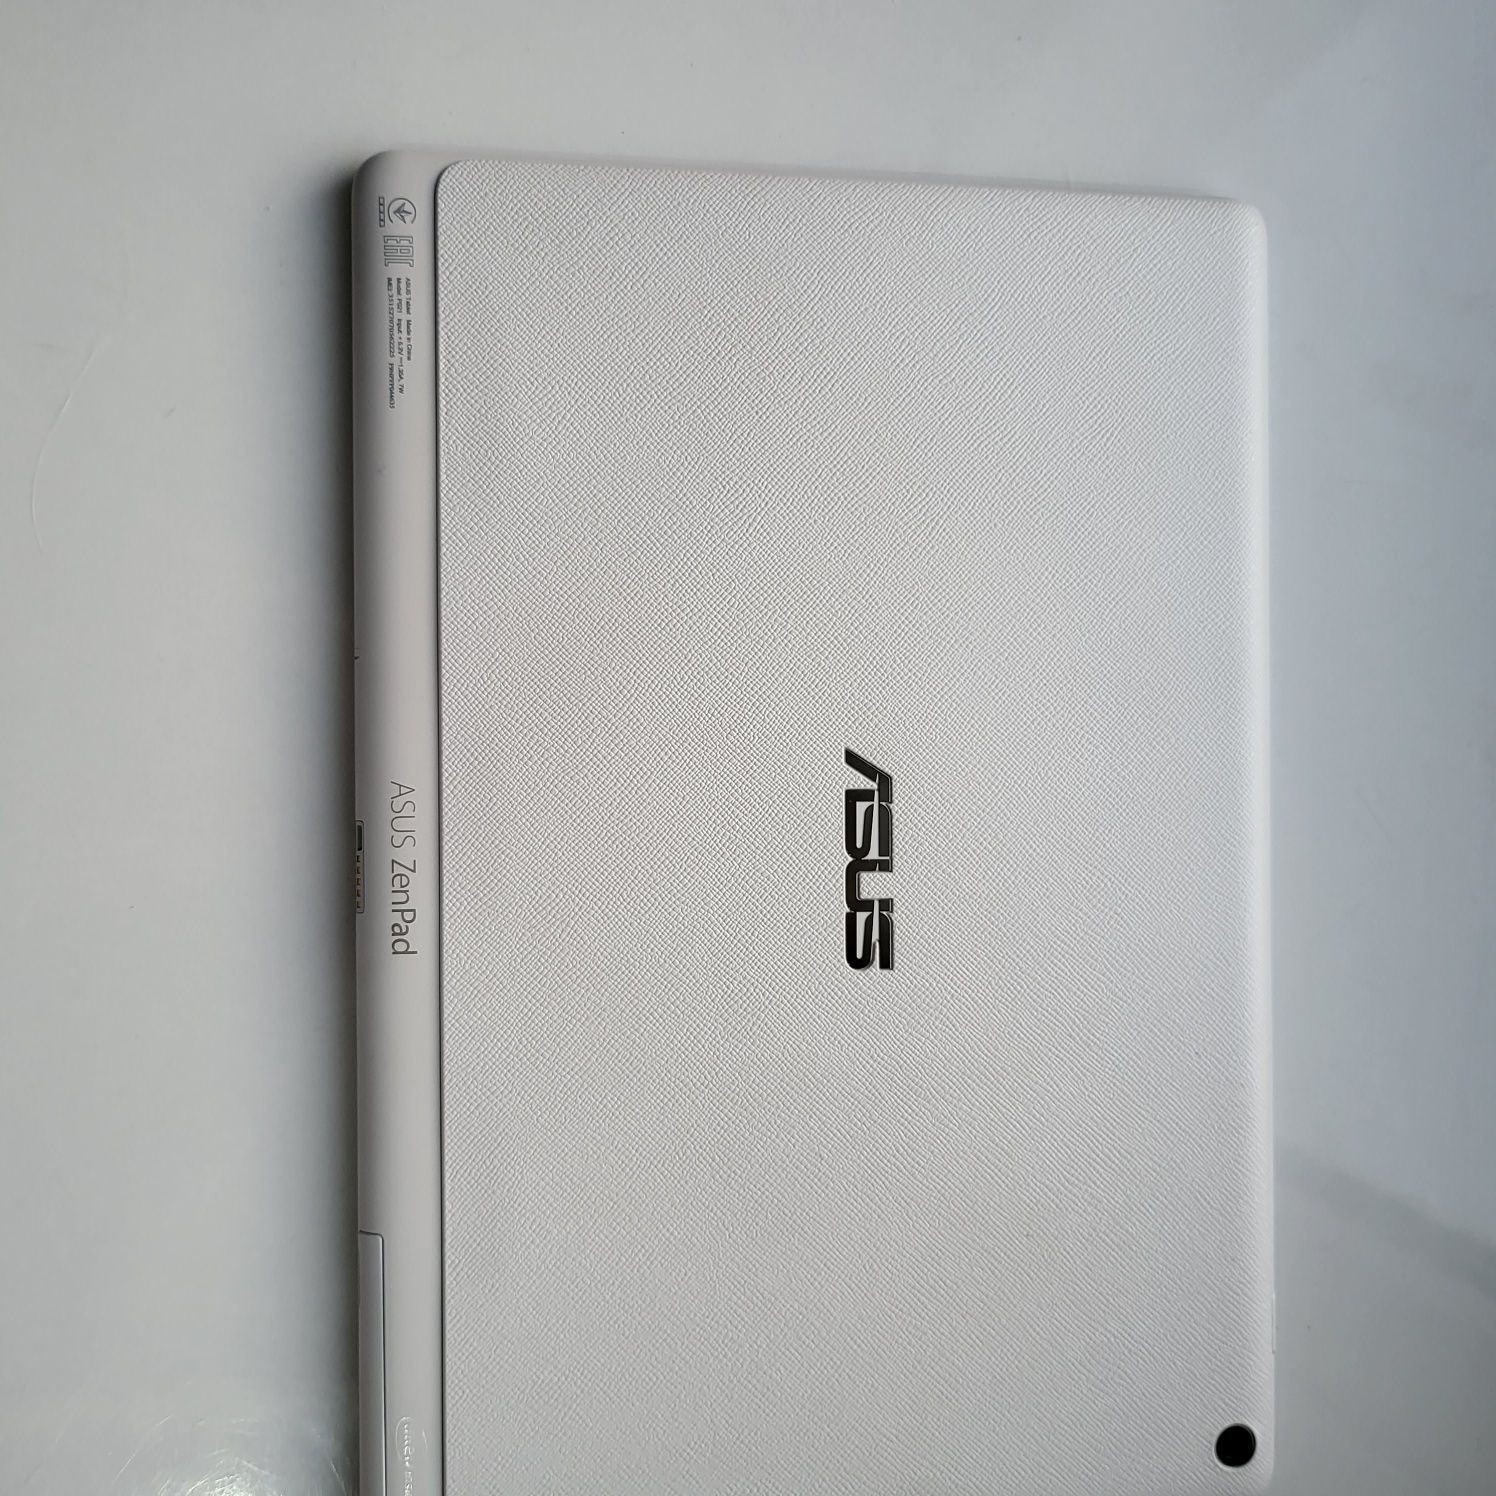 Планшет  ASUS tablet P021